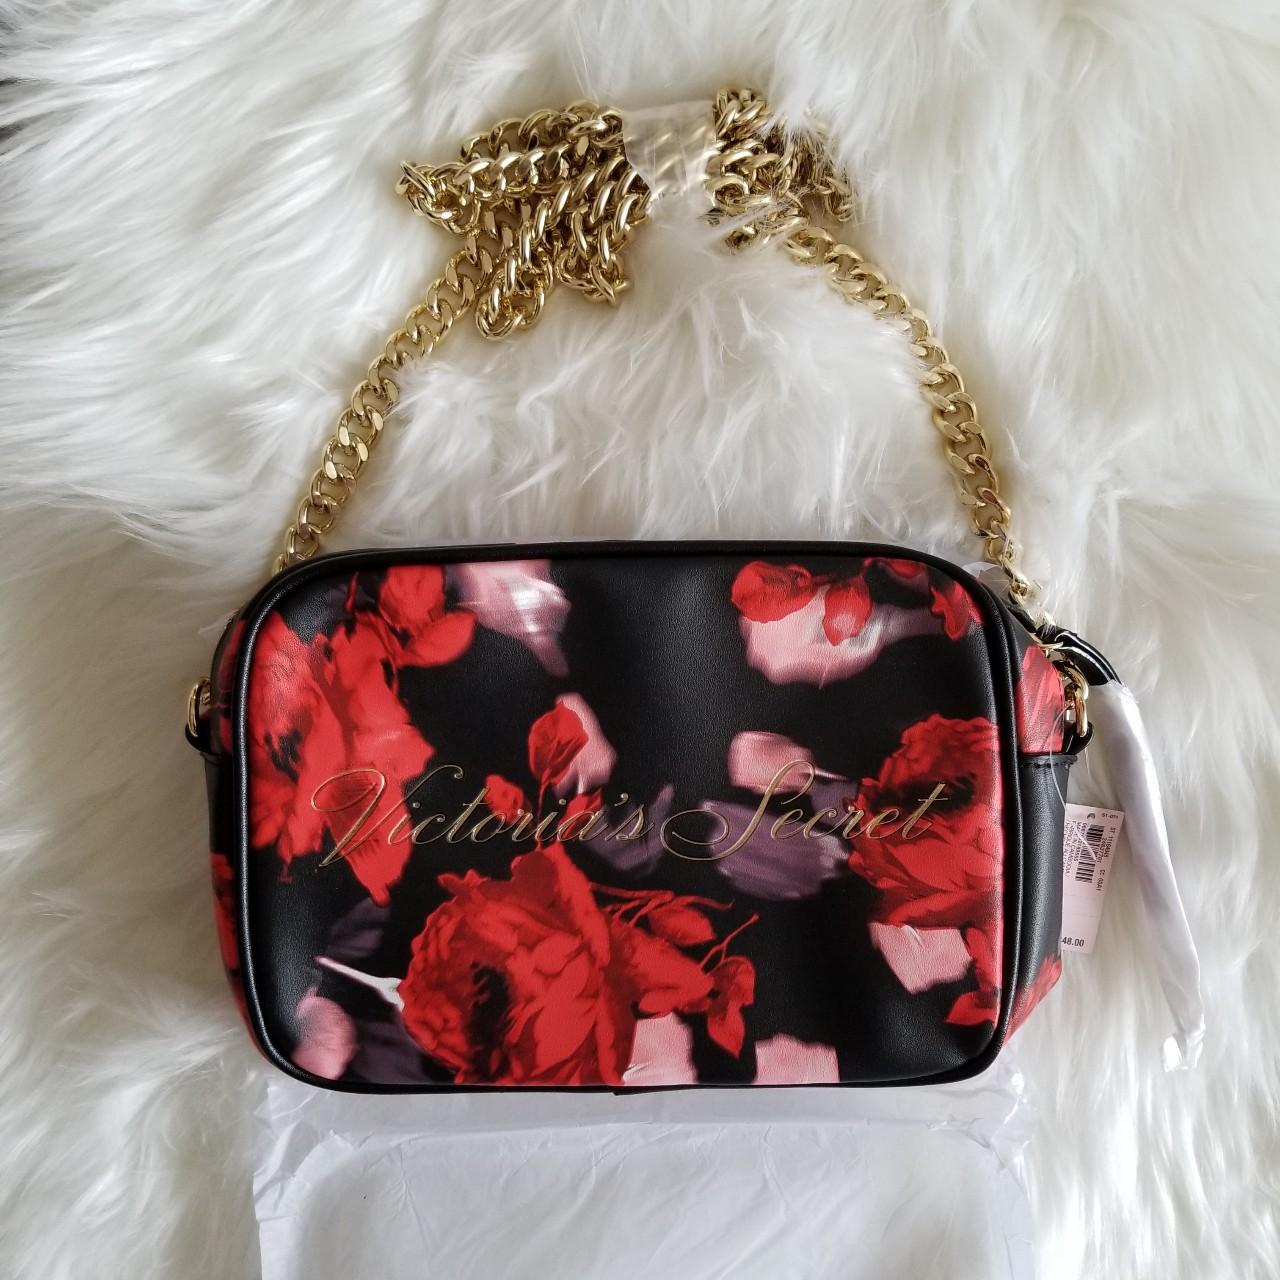 Relic Brand Collection Floral Purse Handbag Wooden Handles | eBay